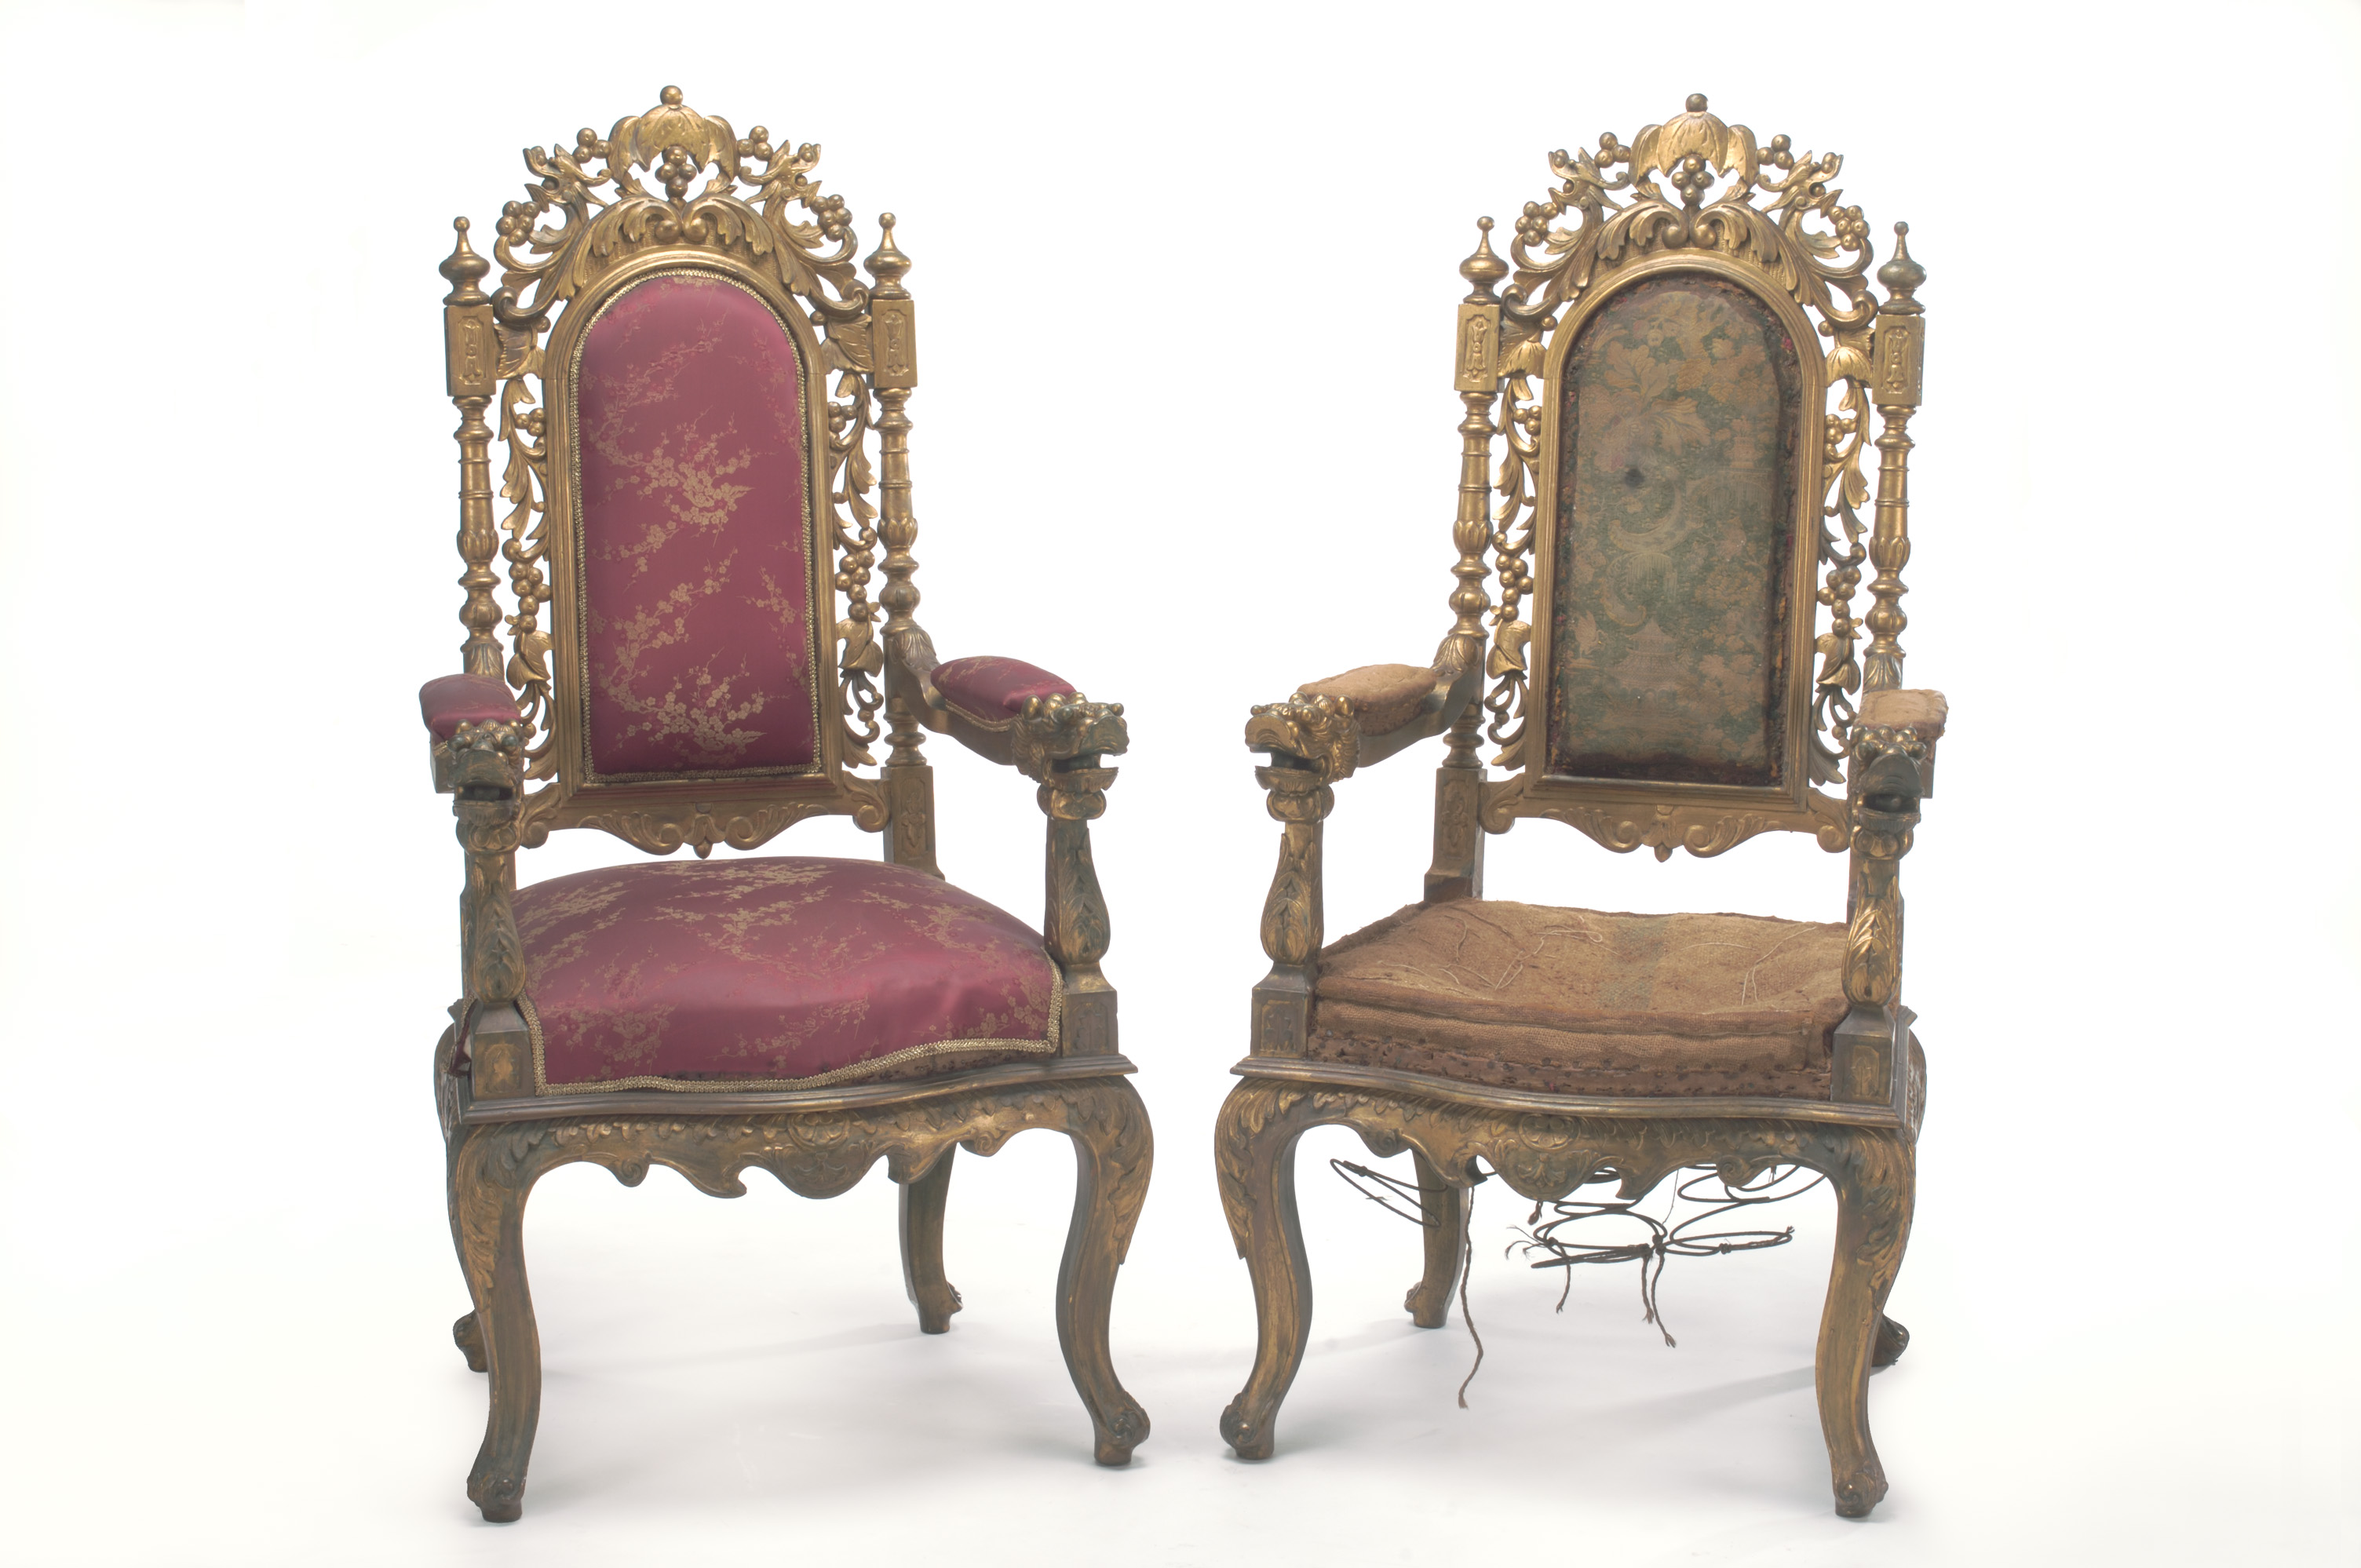 Pair of Peranakan chairs